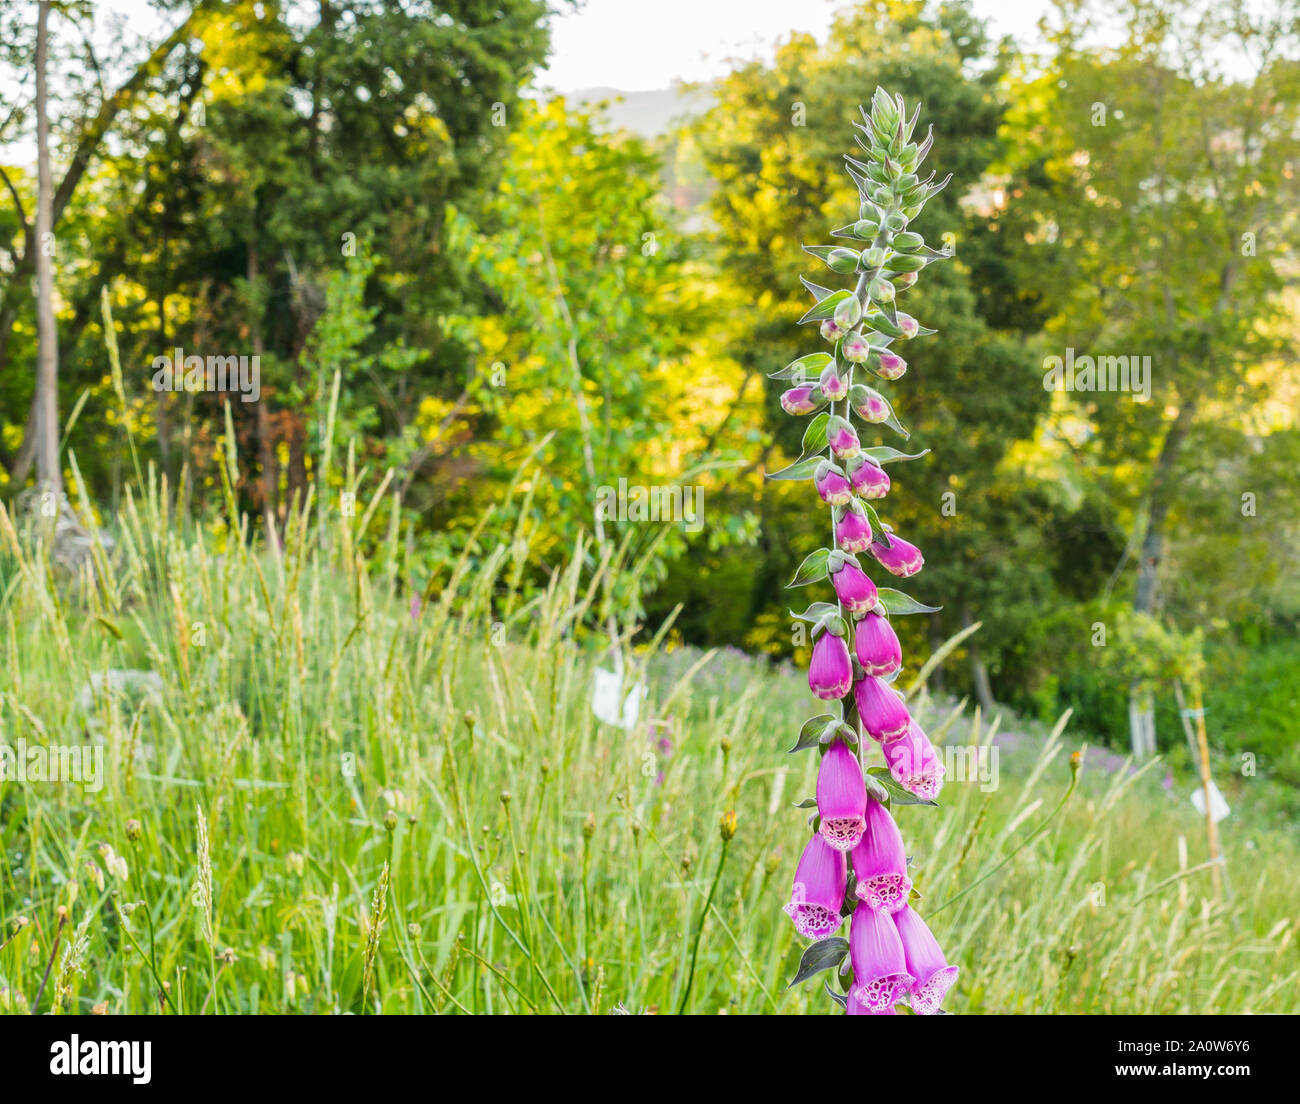 field with digitalis purpurea or foxglove plant blooming Stock Photo